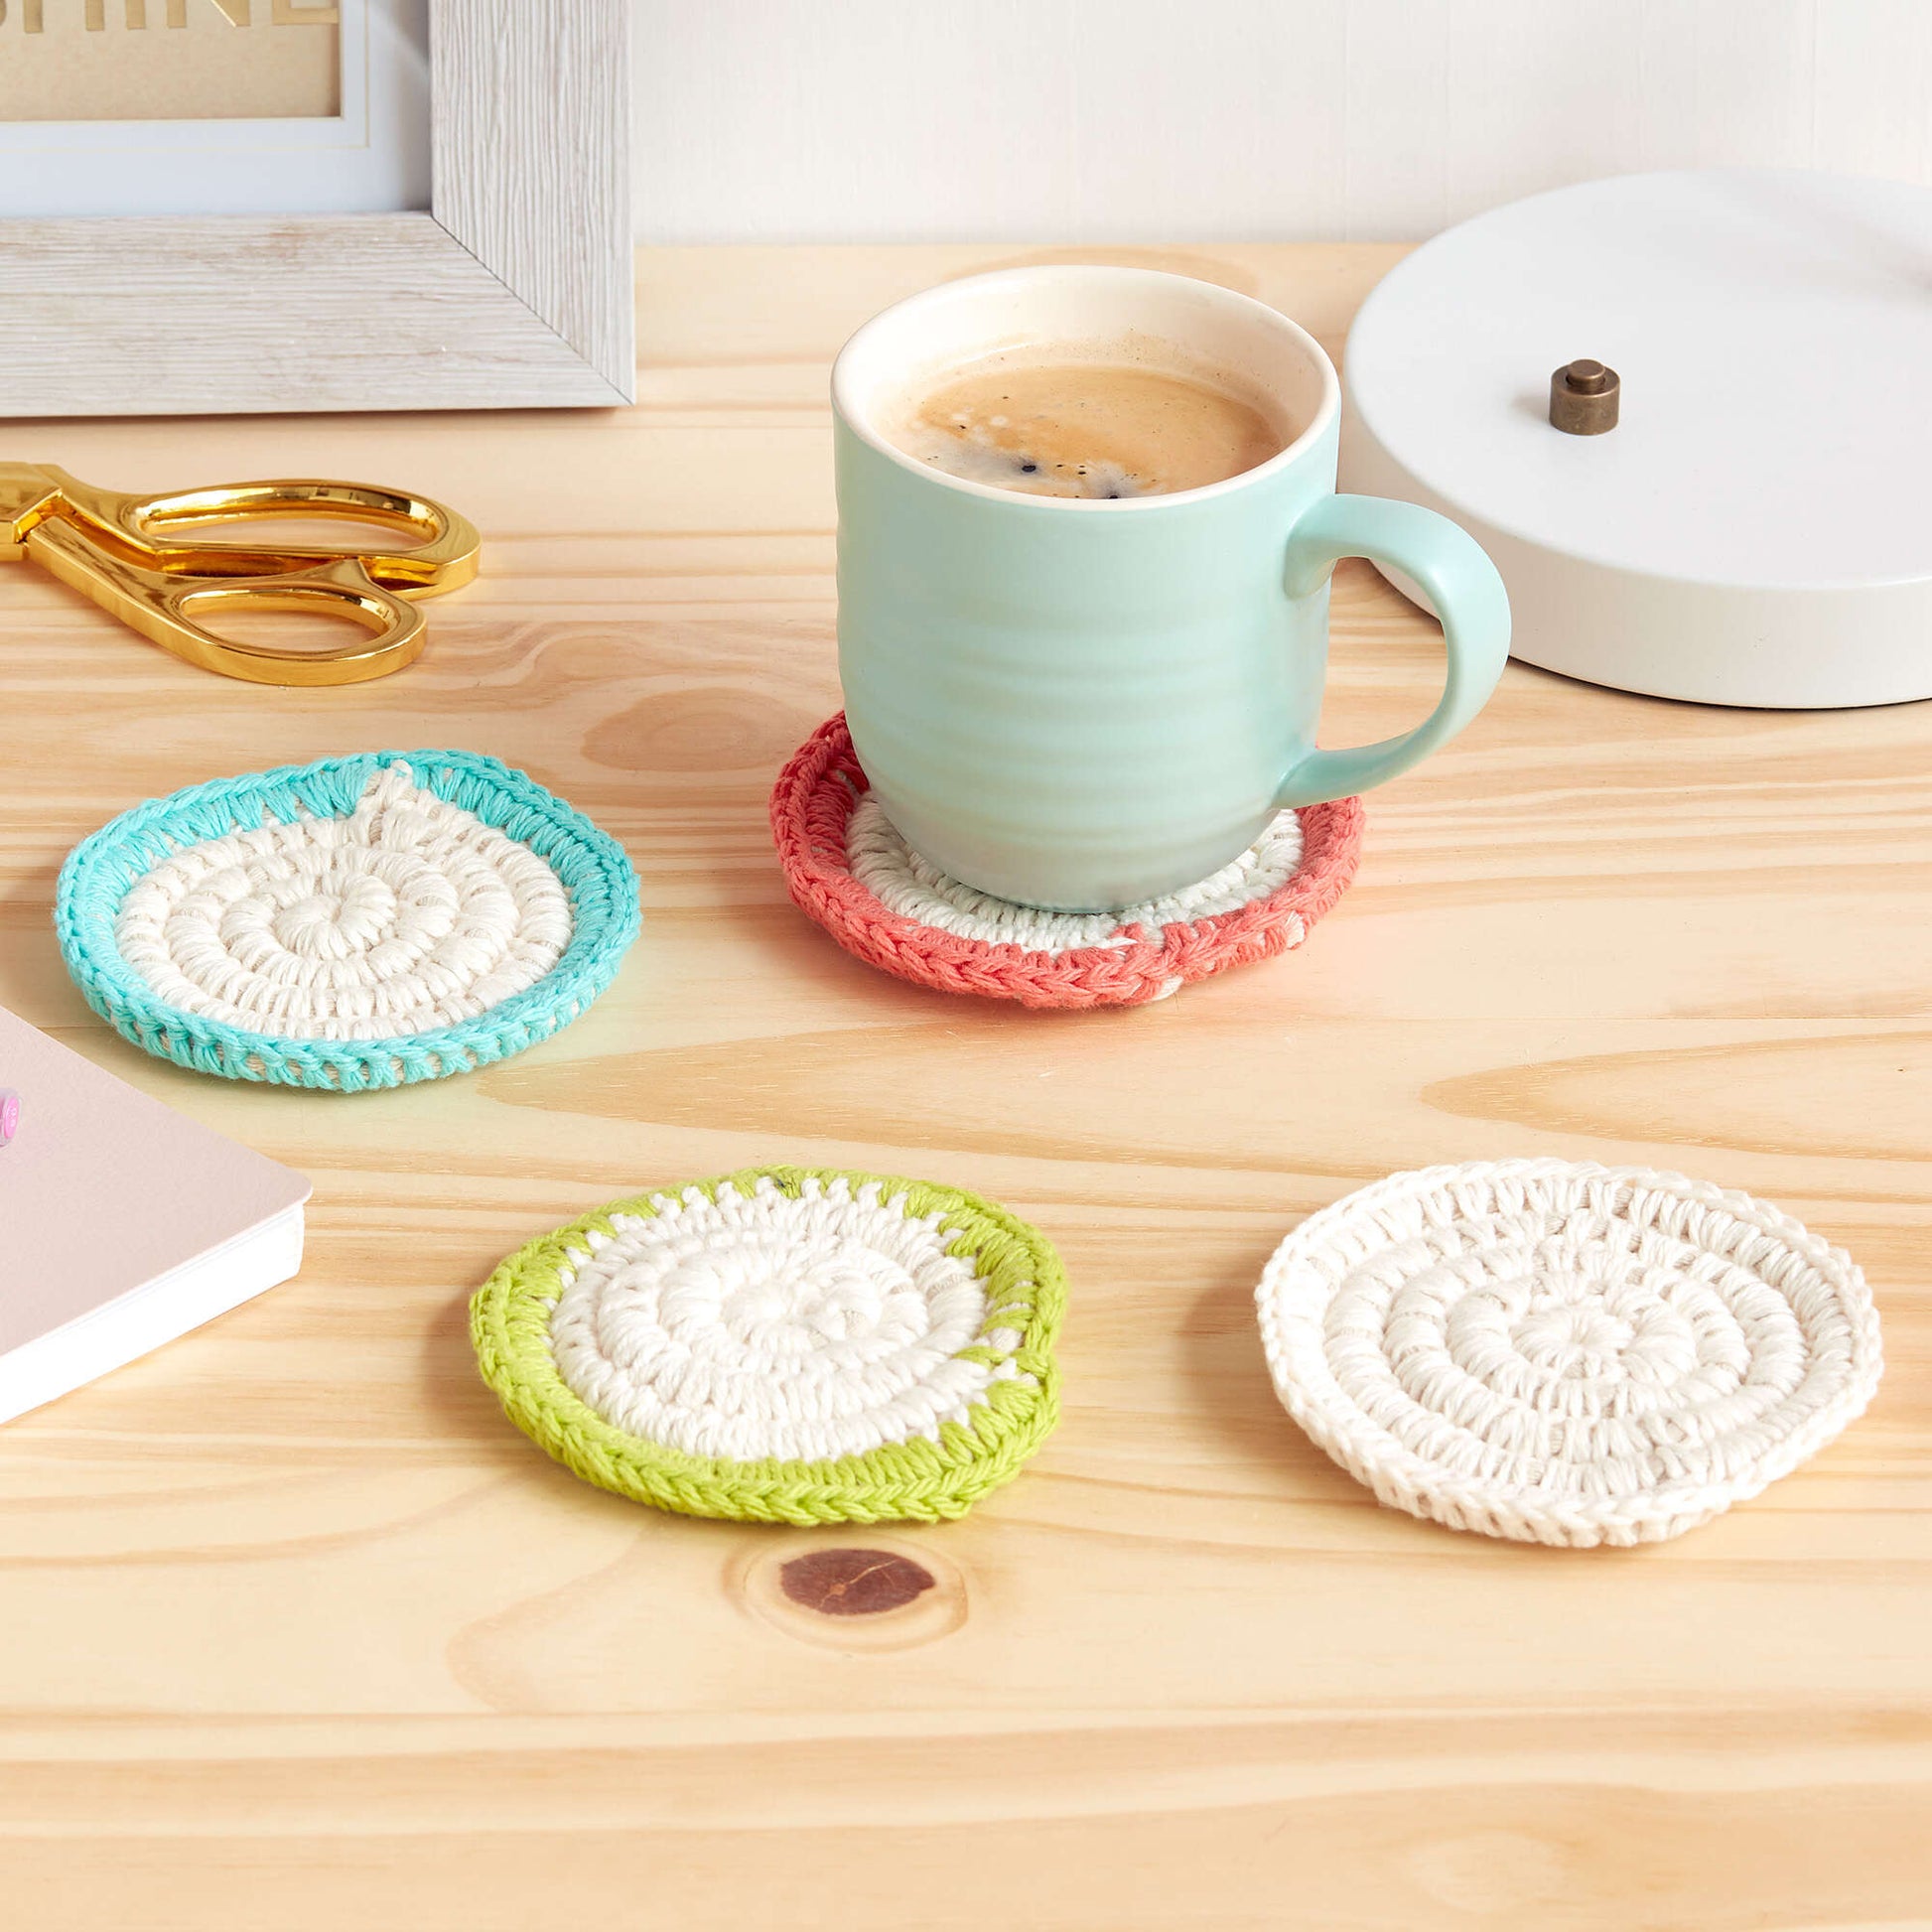 Crochet Coasters - A Spoonful of Sugar